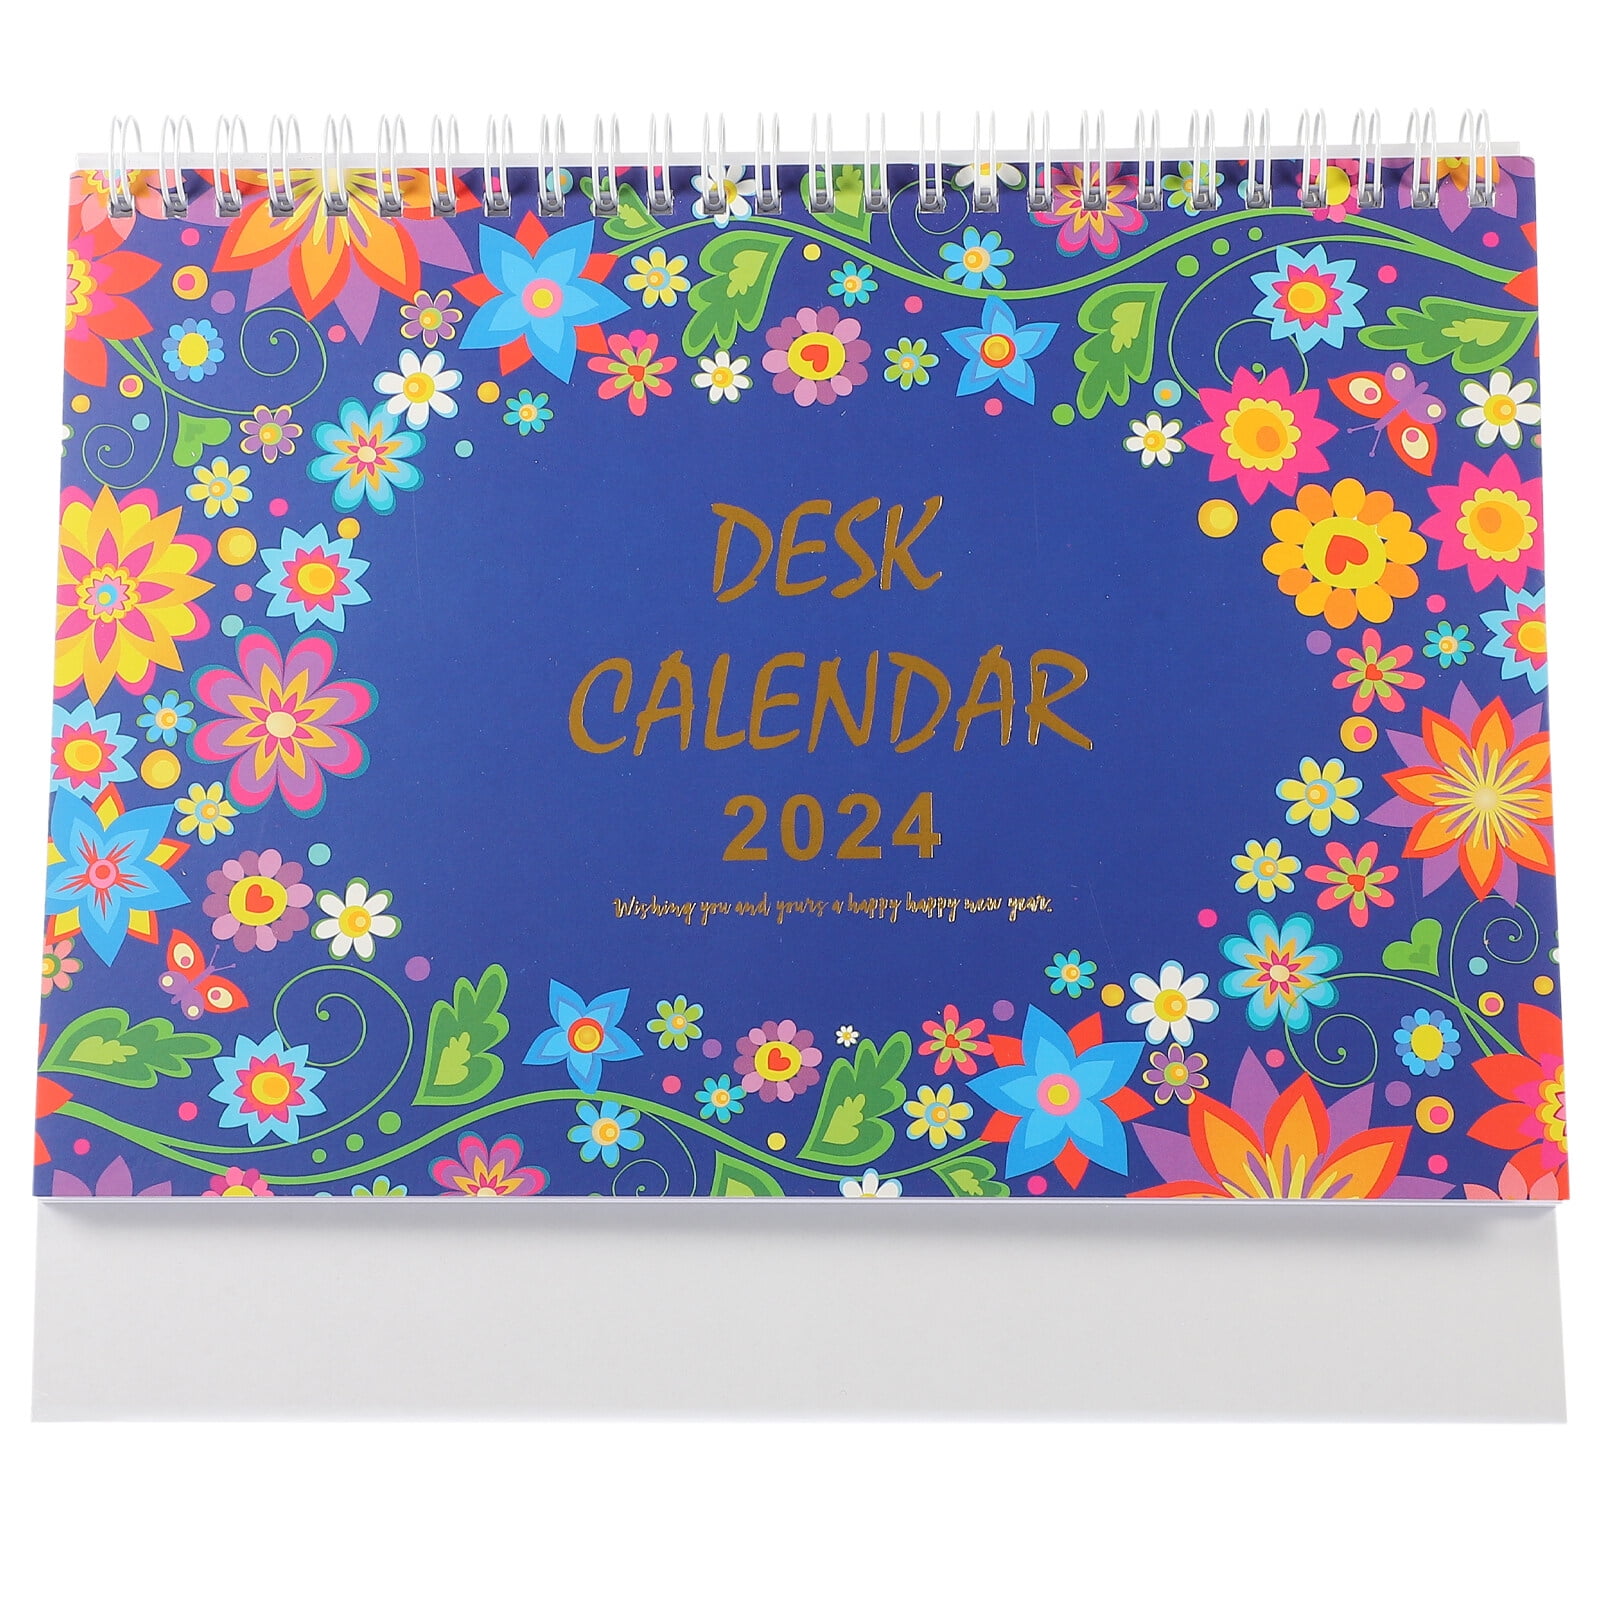 Desk Calendar 2024 Desk Calendar Ornament Stand Up Flip Calendar Decor